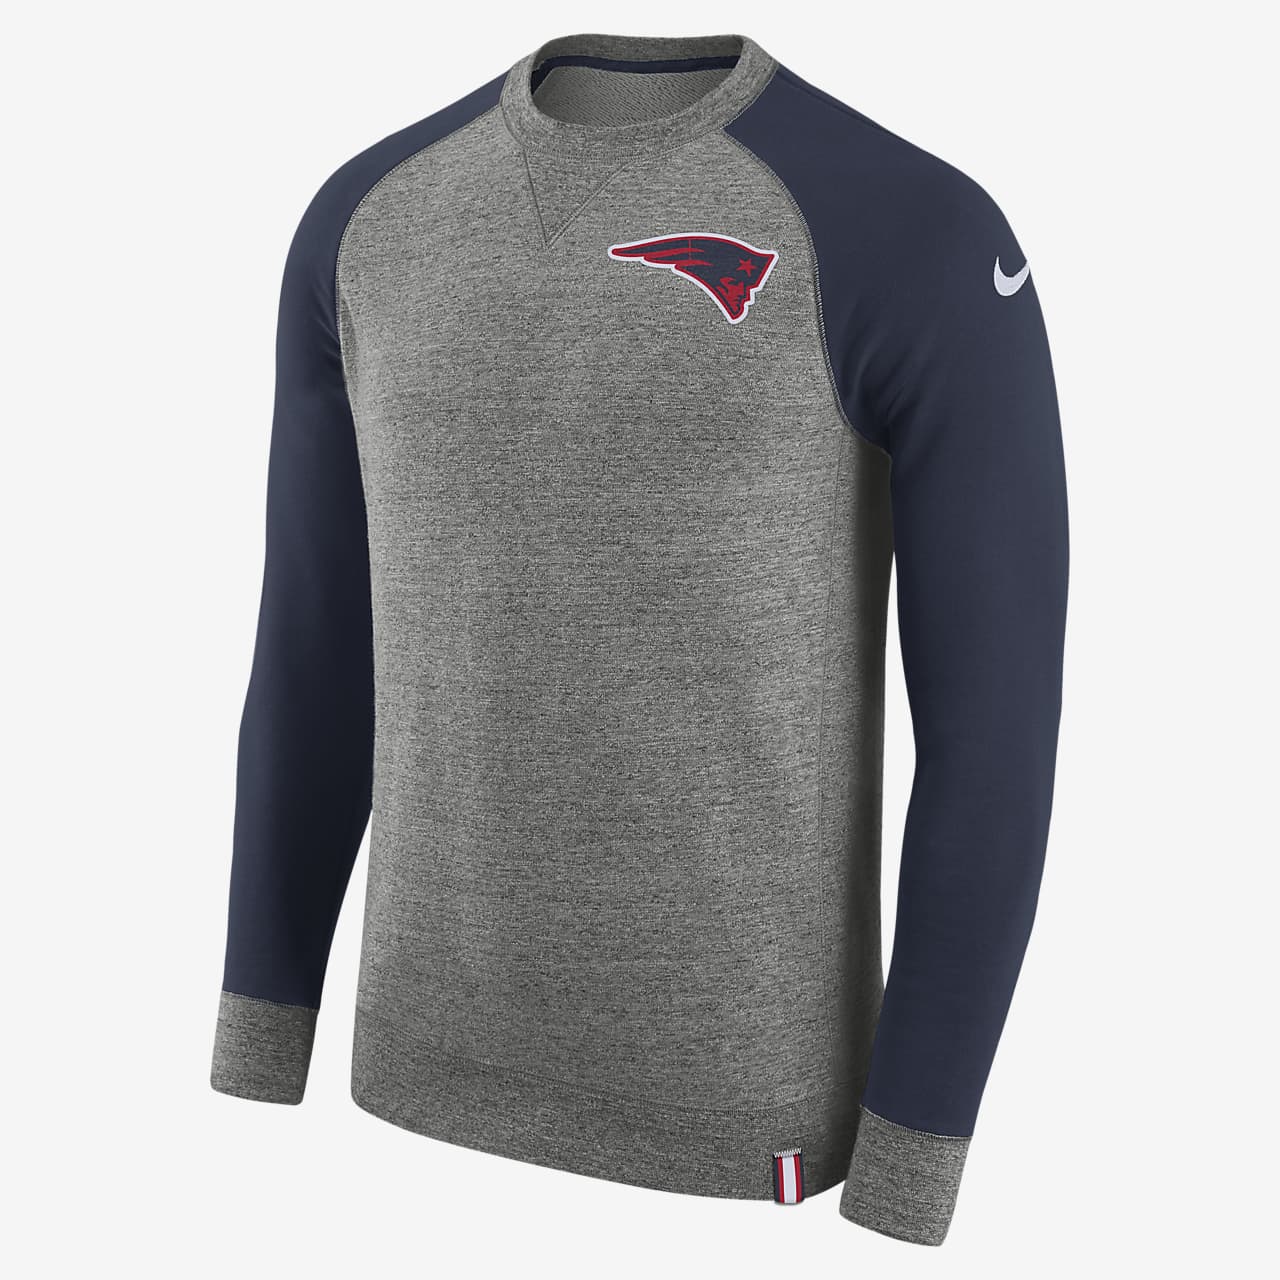 Sweat-shirt Nike AW77 (NFL Patriots) pour Homme